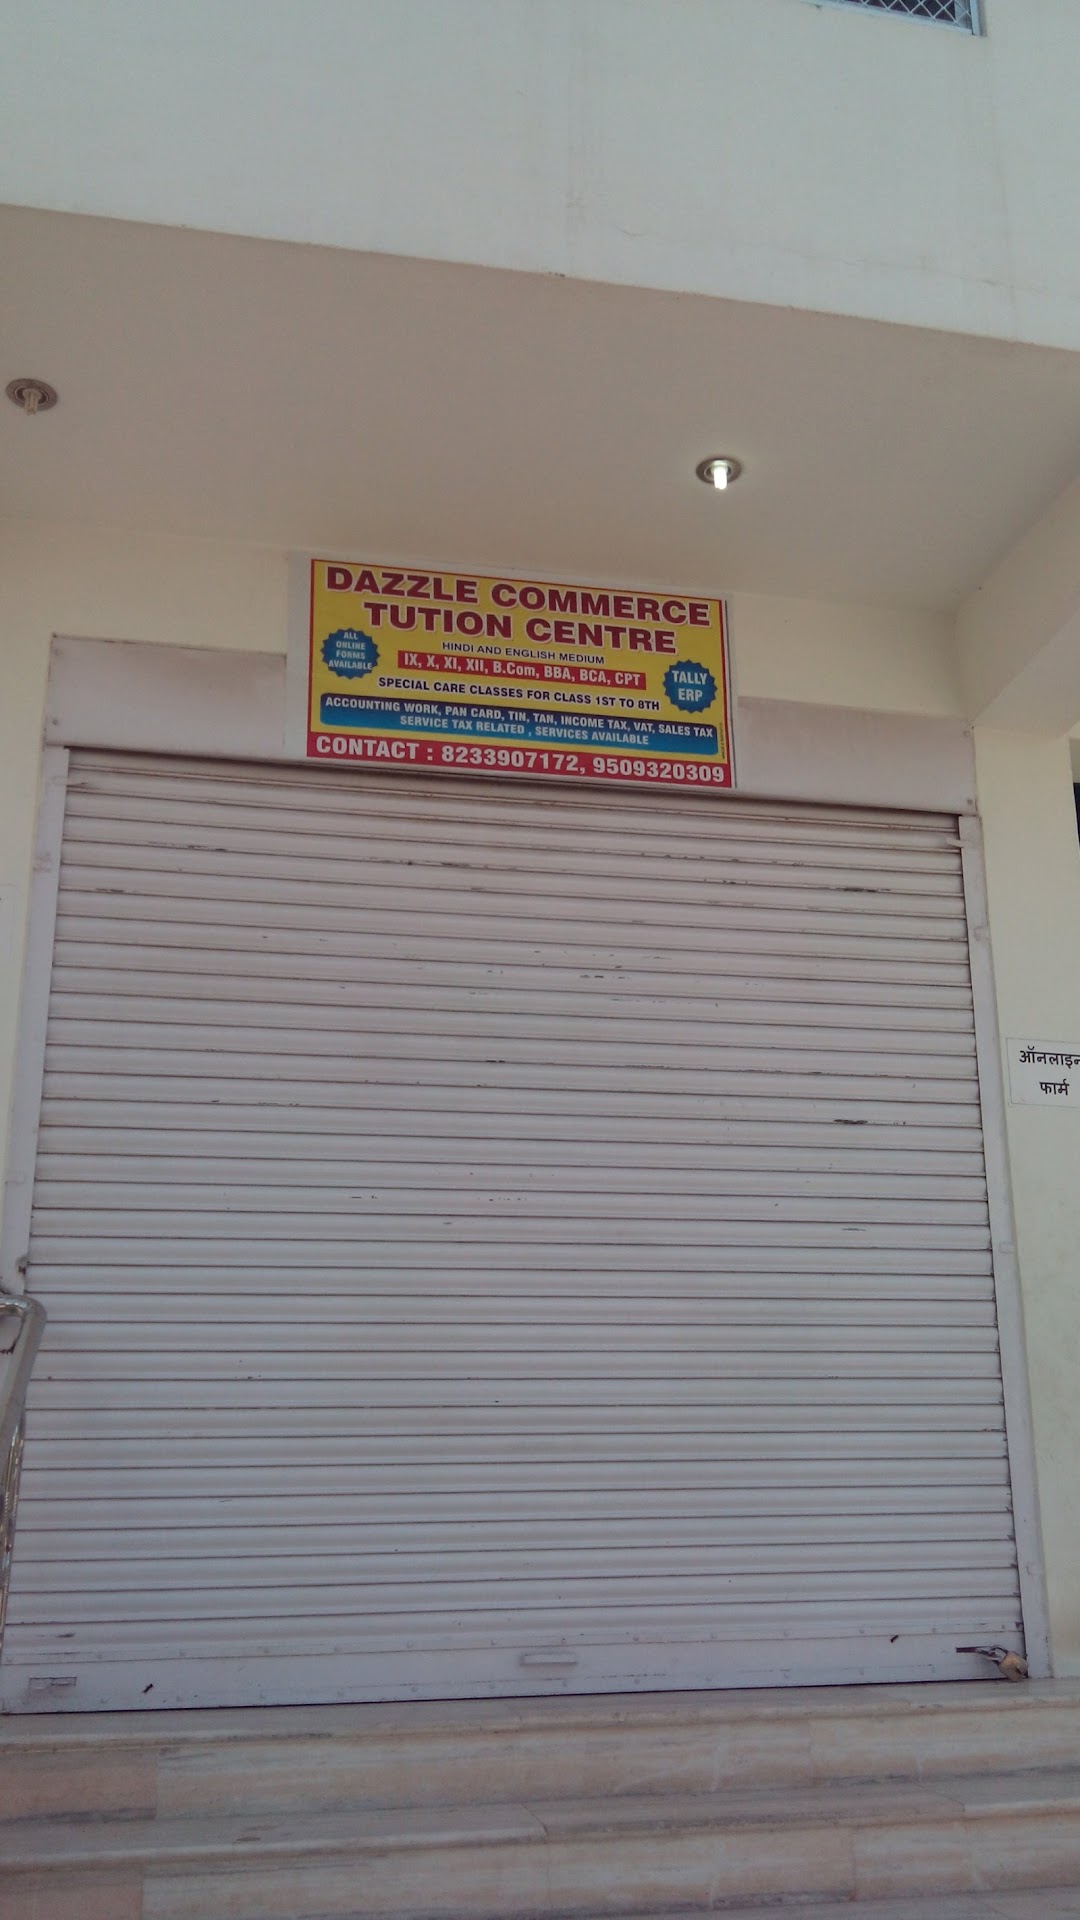 Dazzle Commerce Tution Centre